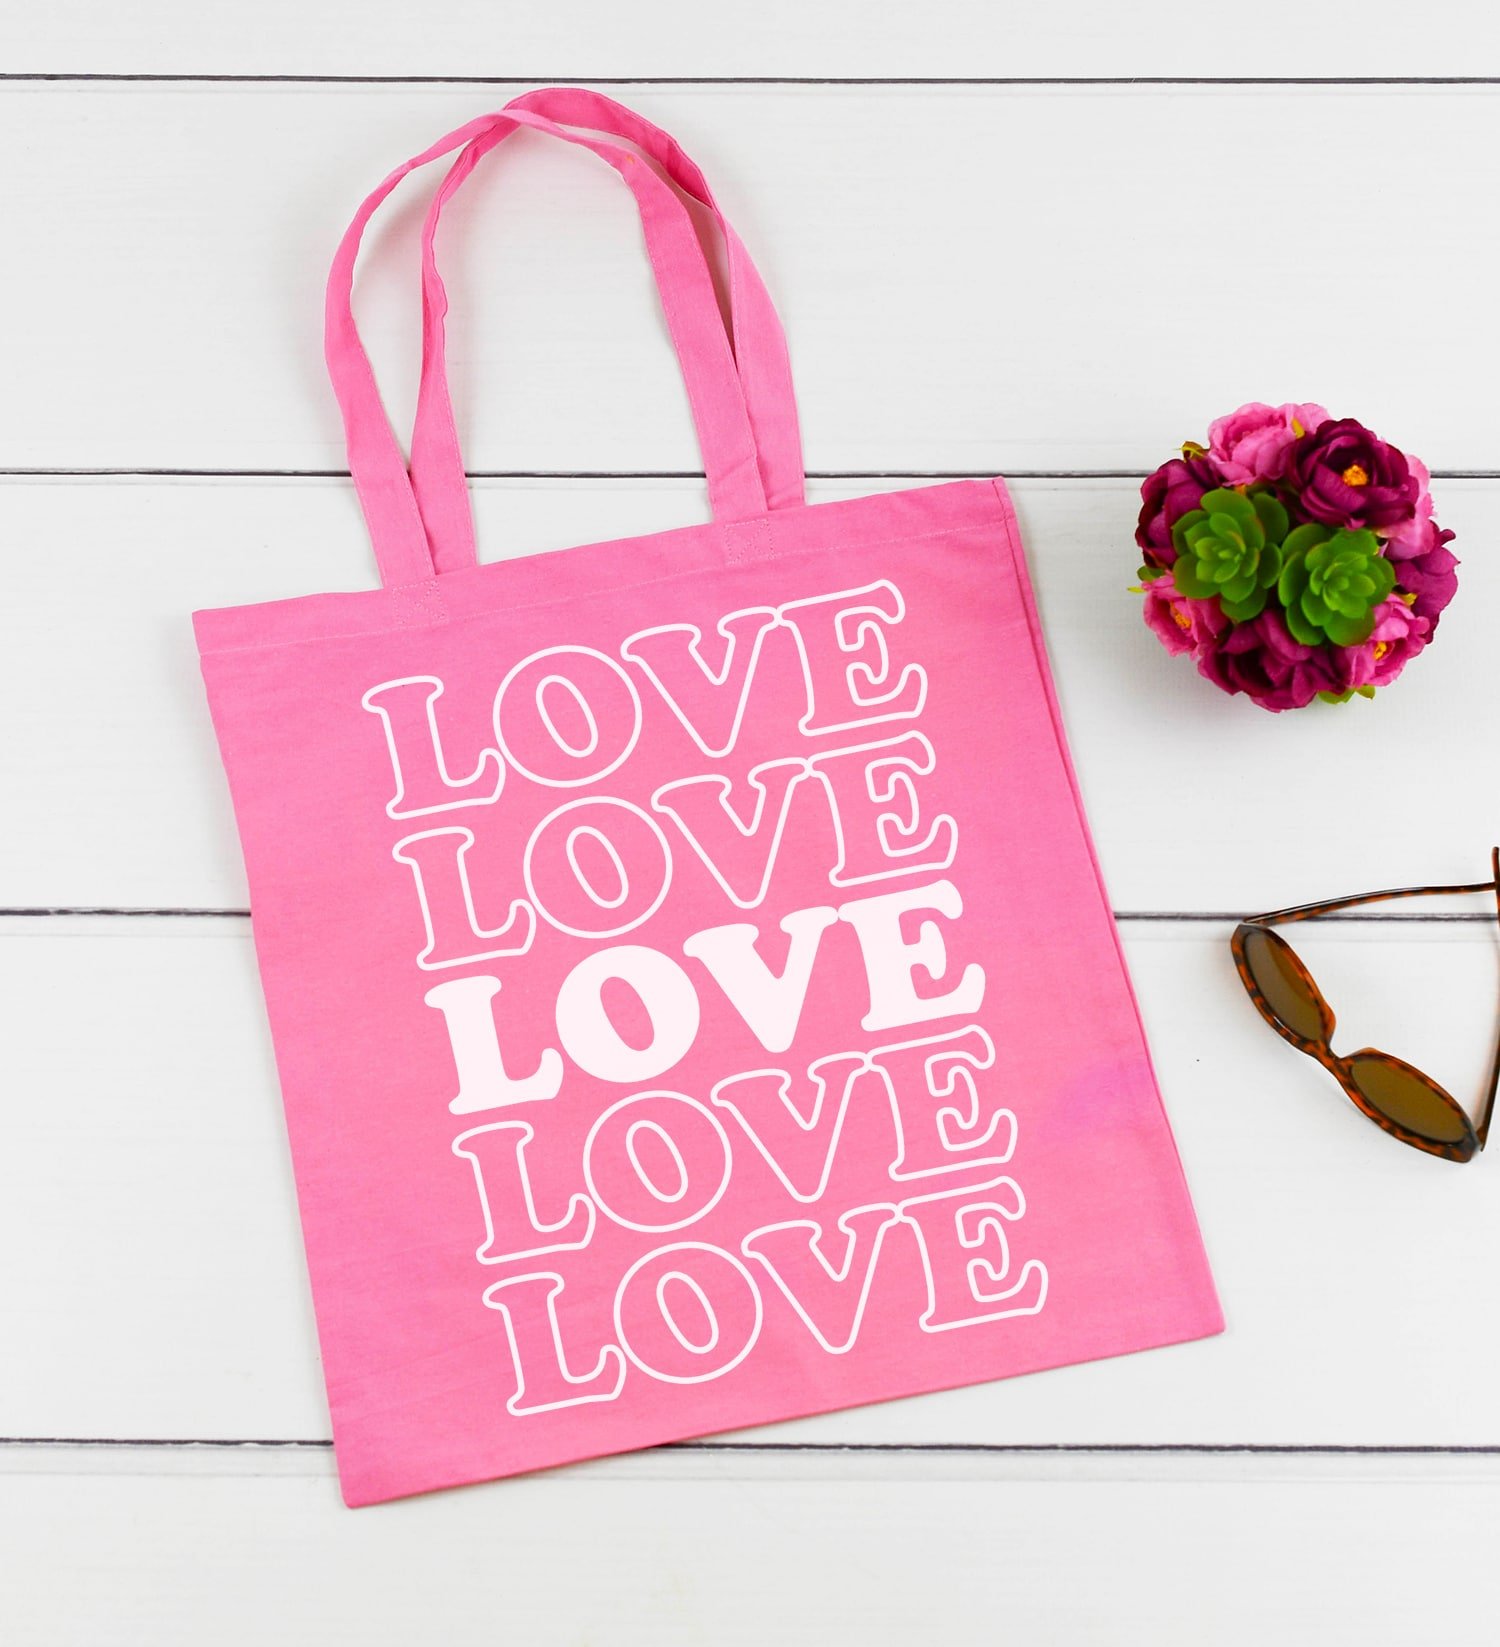 LOVE svg file on pink canvas tote bag